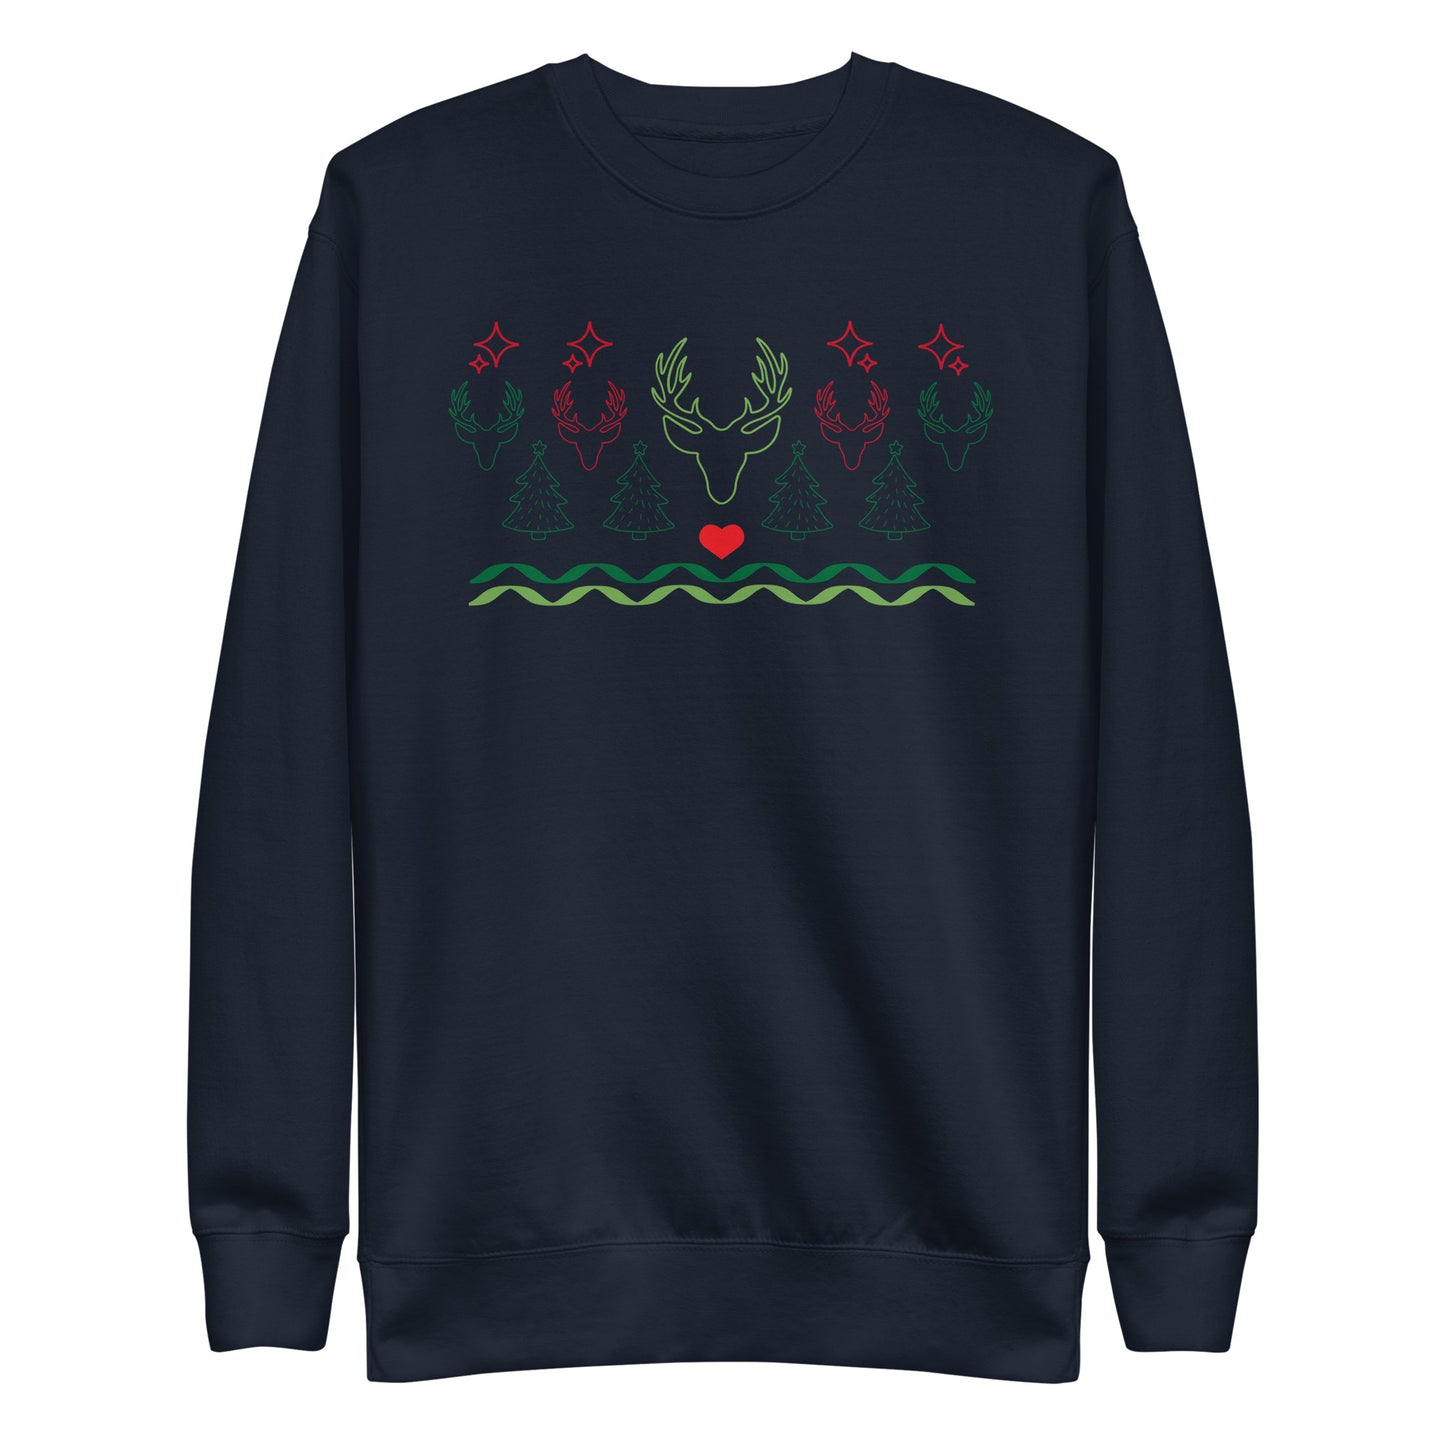 Reindeers sweatshirt